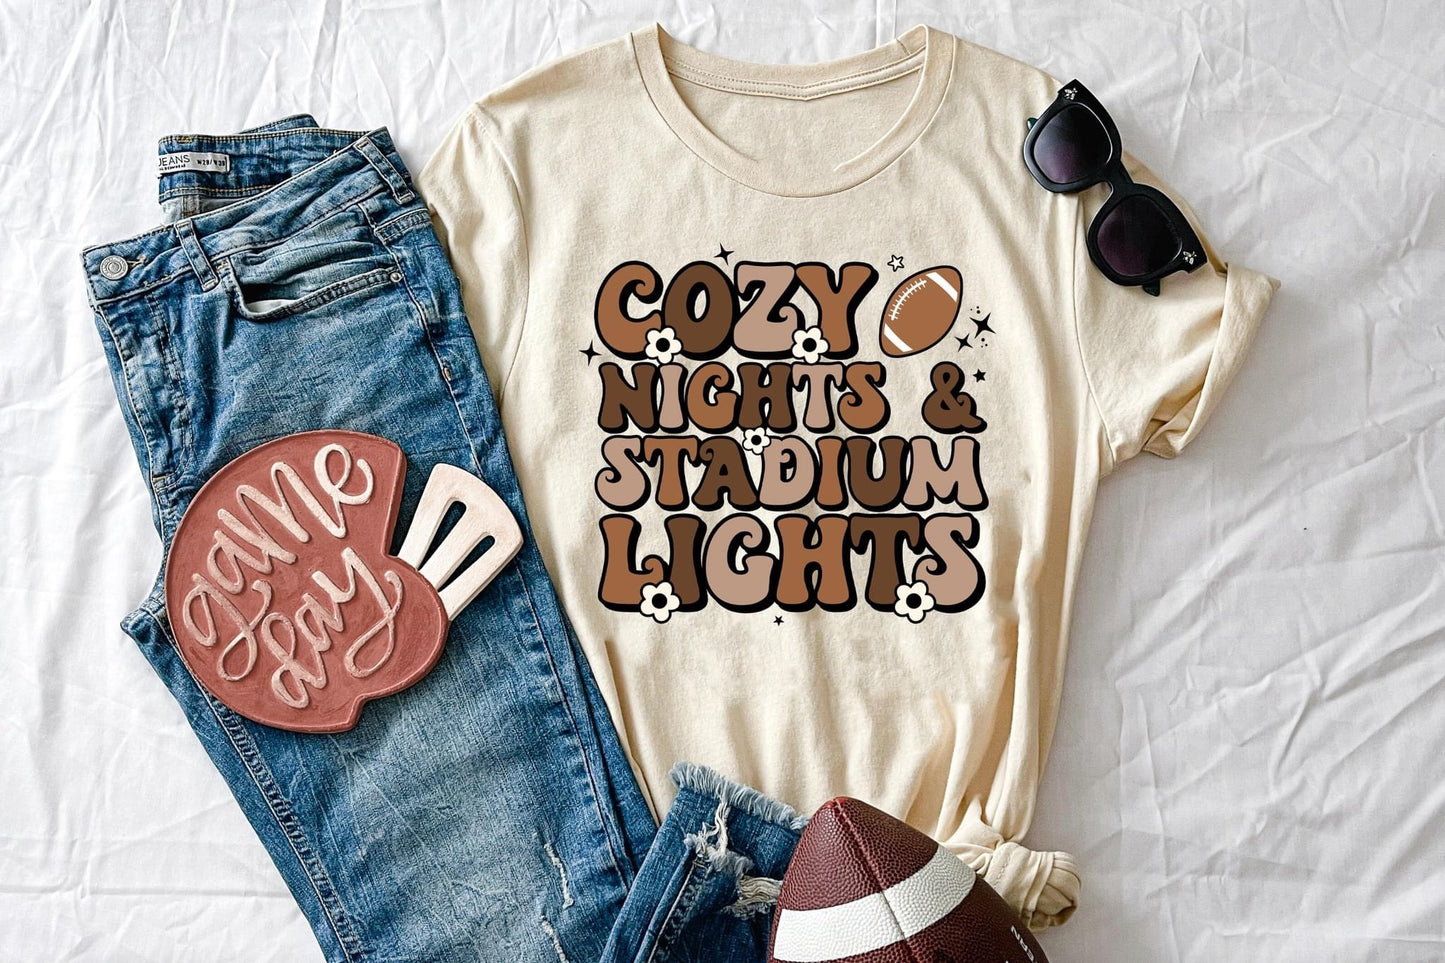 PREORDER - Cozy Nights & Stadium Lights SS Graphic Tee